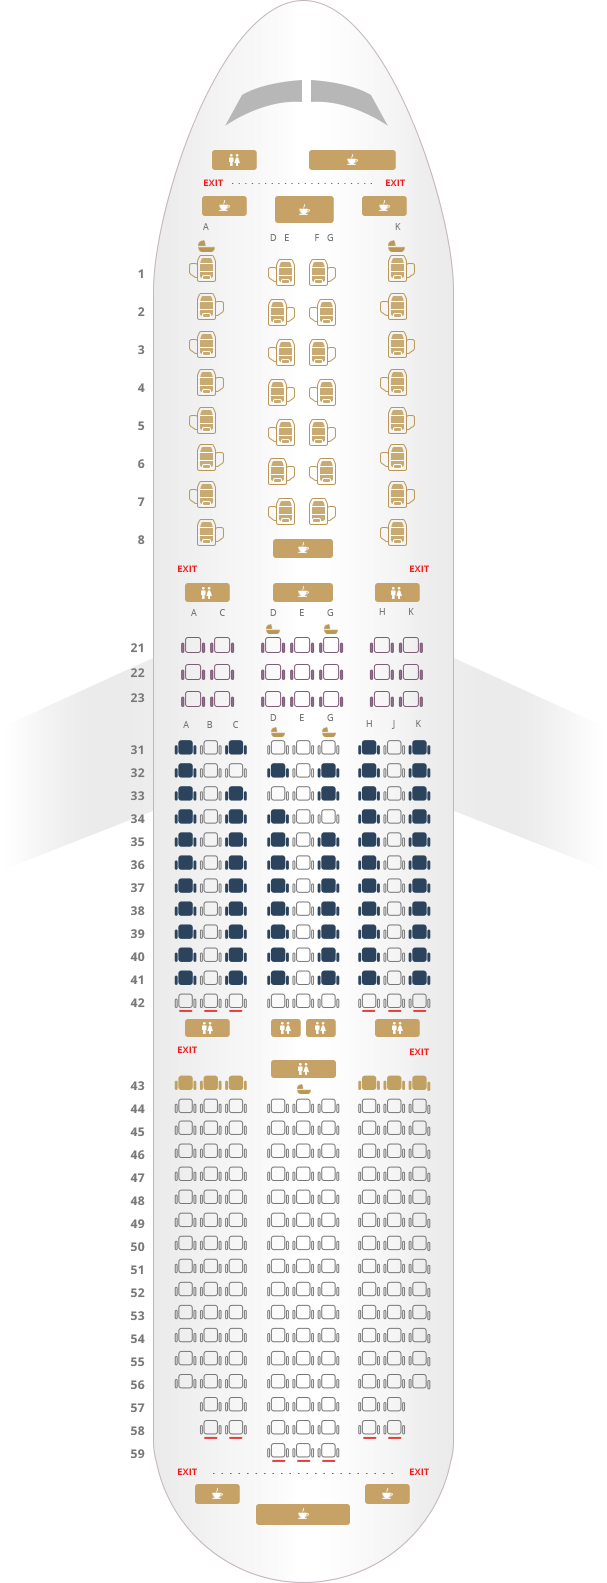 787 9 seat map